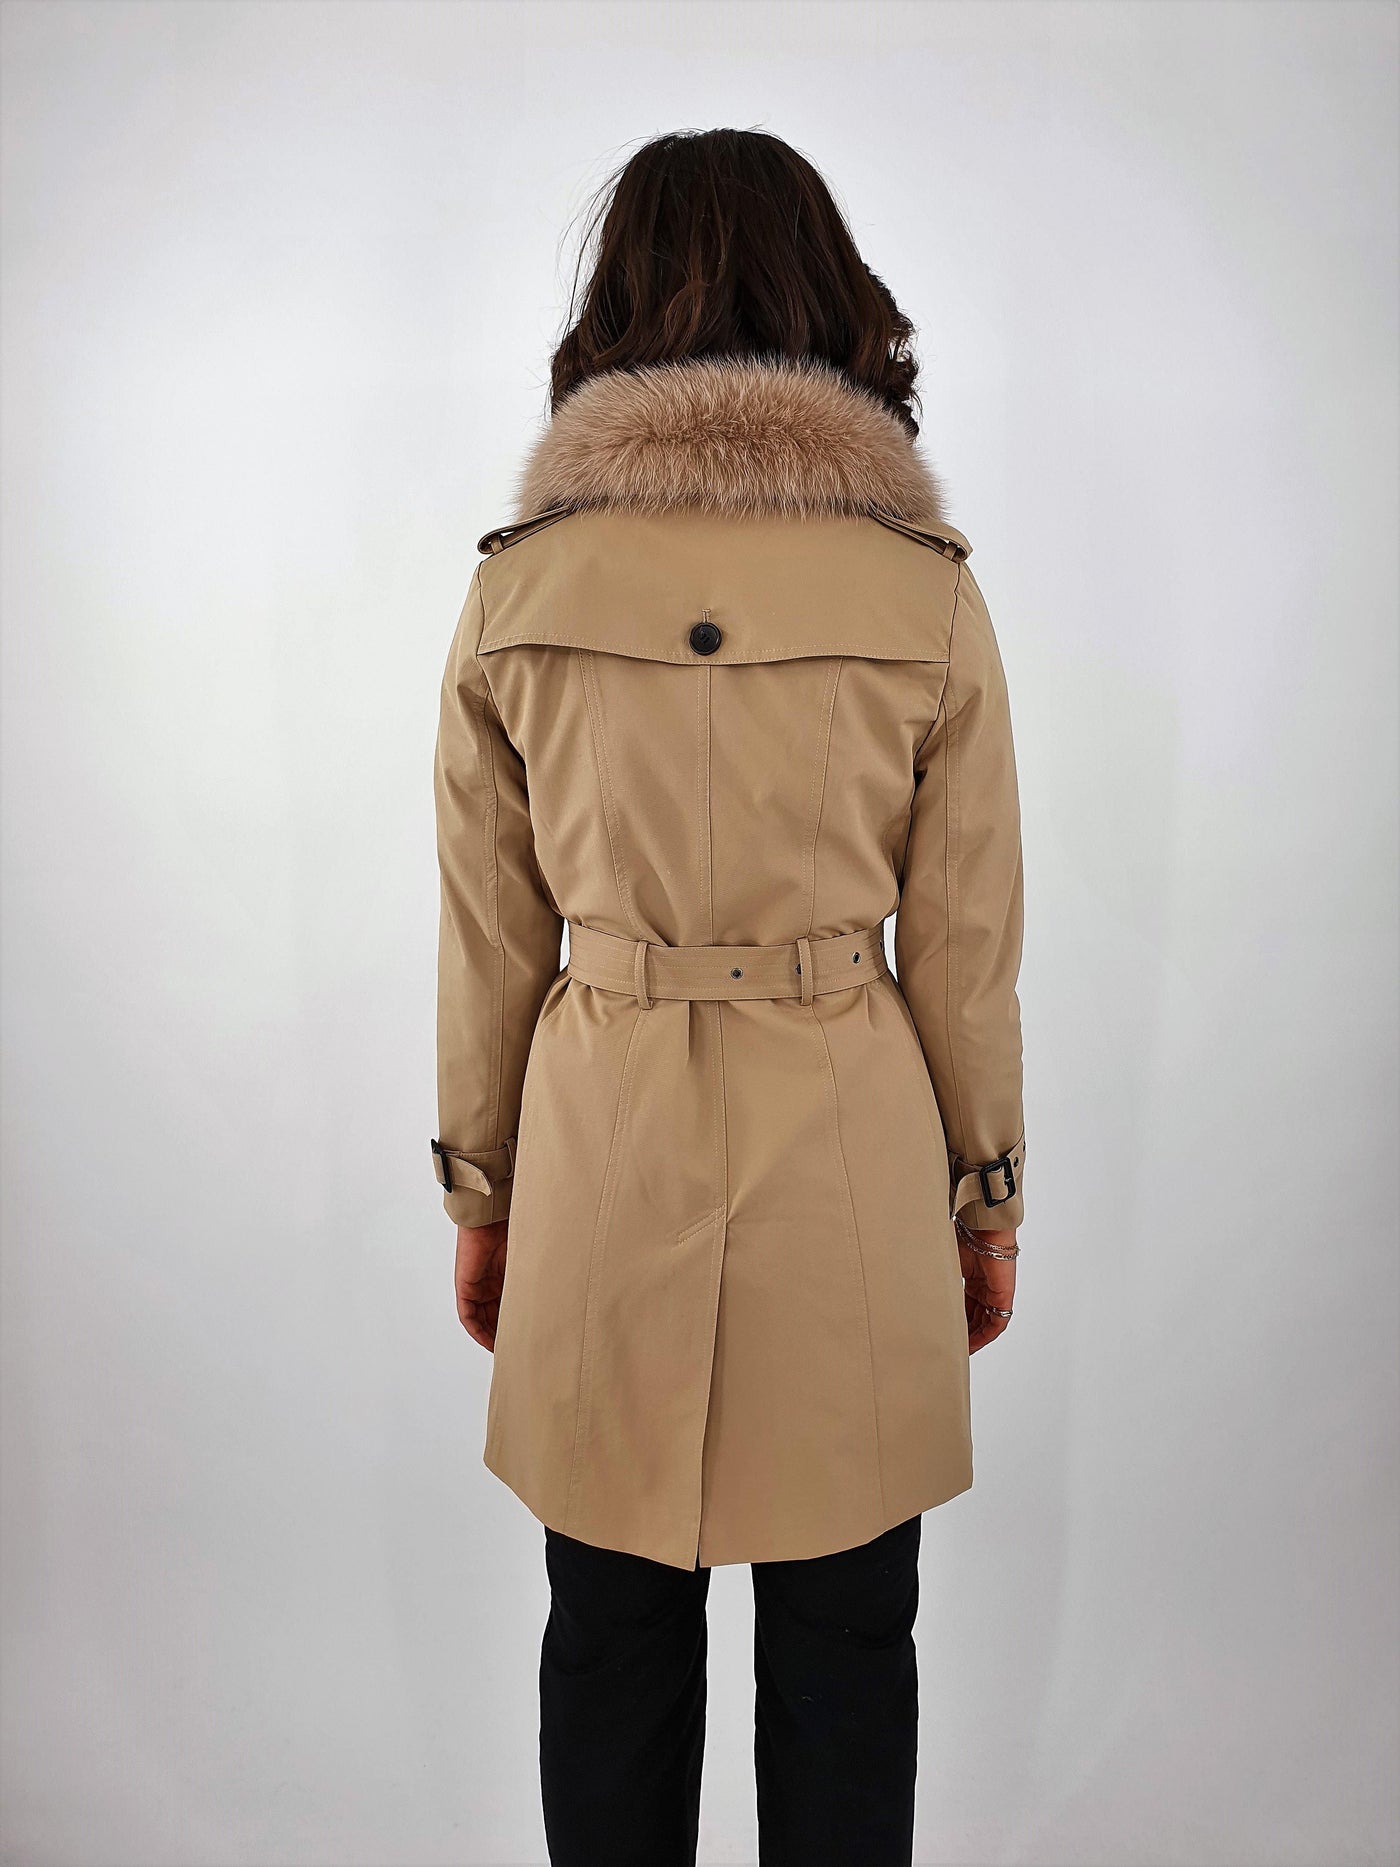 Daisy Trench Coat, 90 cm. - Textile - Women - Beige - Textile - Women - Daisy Trench Coat, 90 cm. - Textile - Women - Beige - Stampe Pels